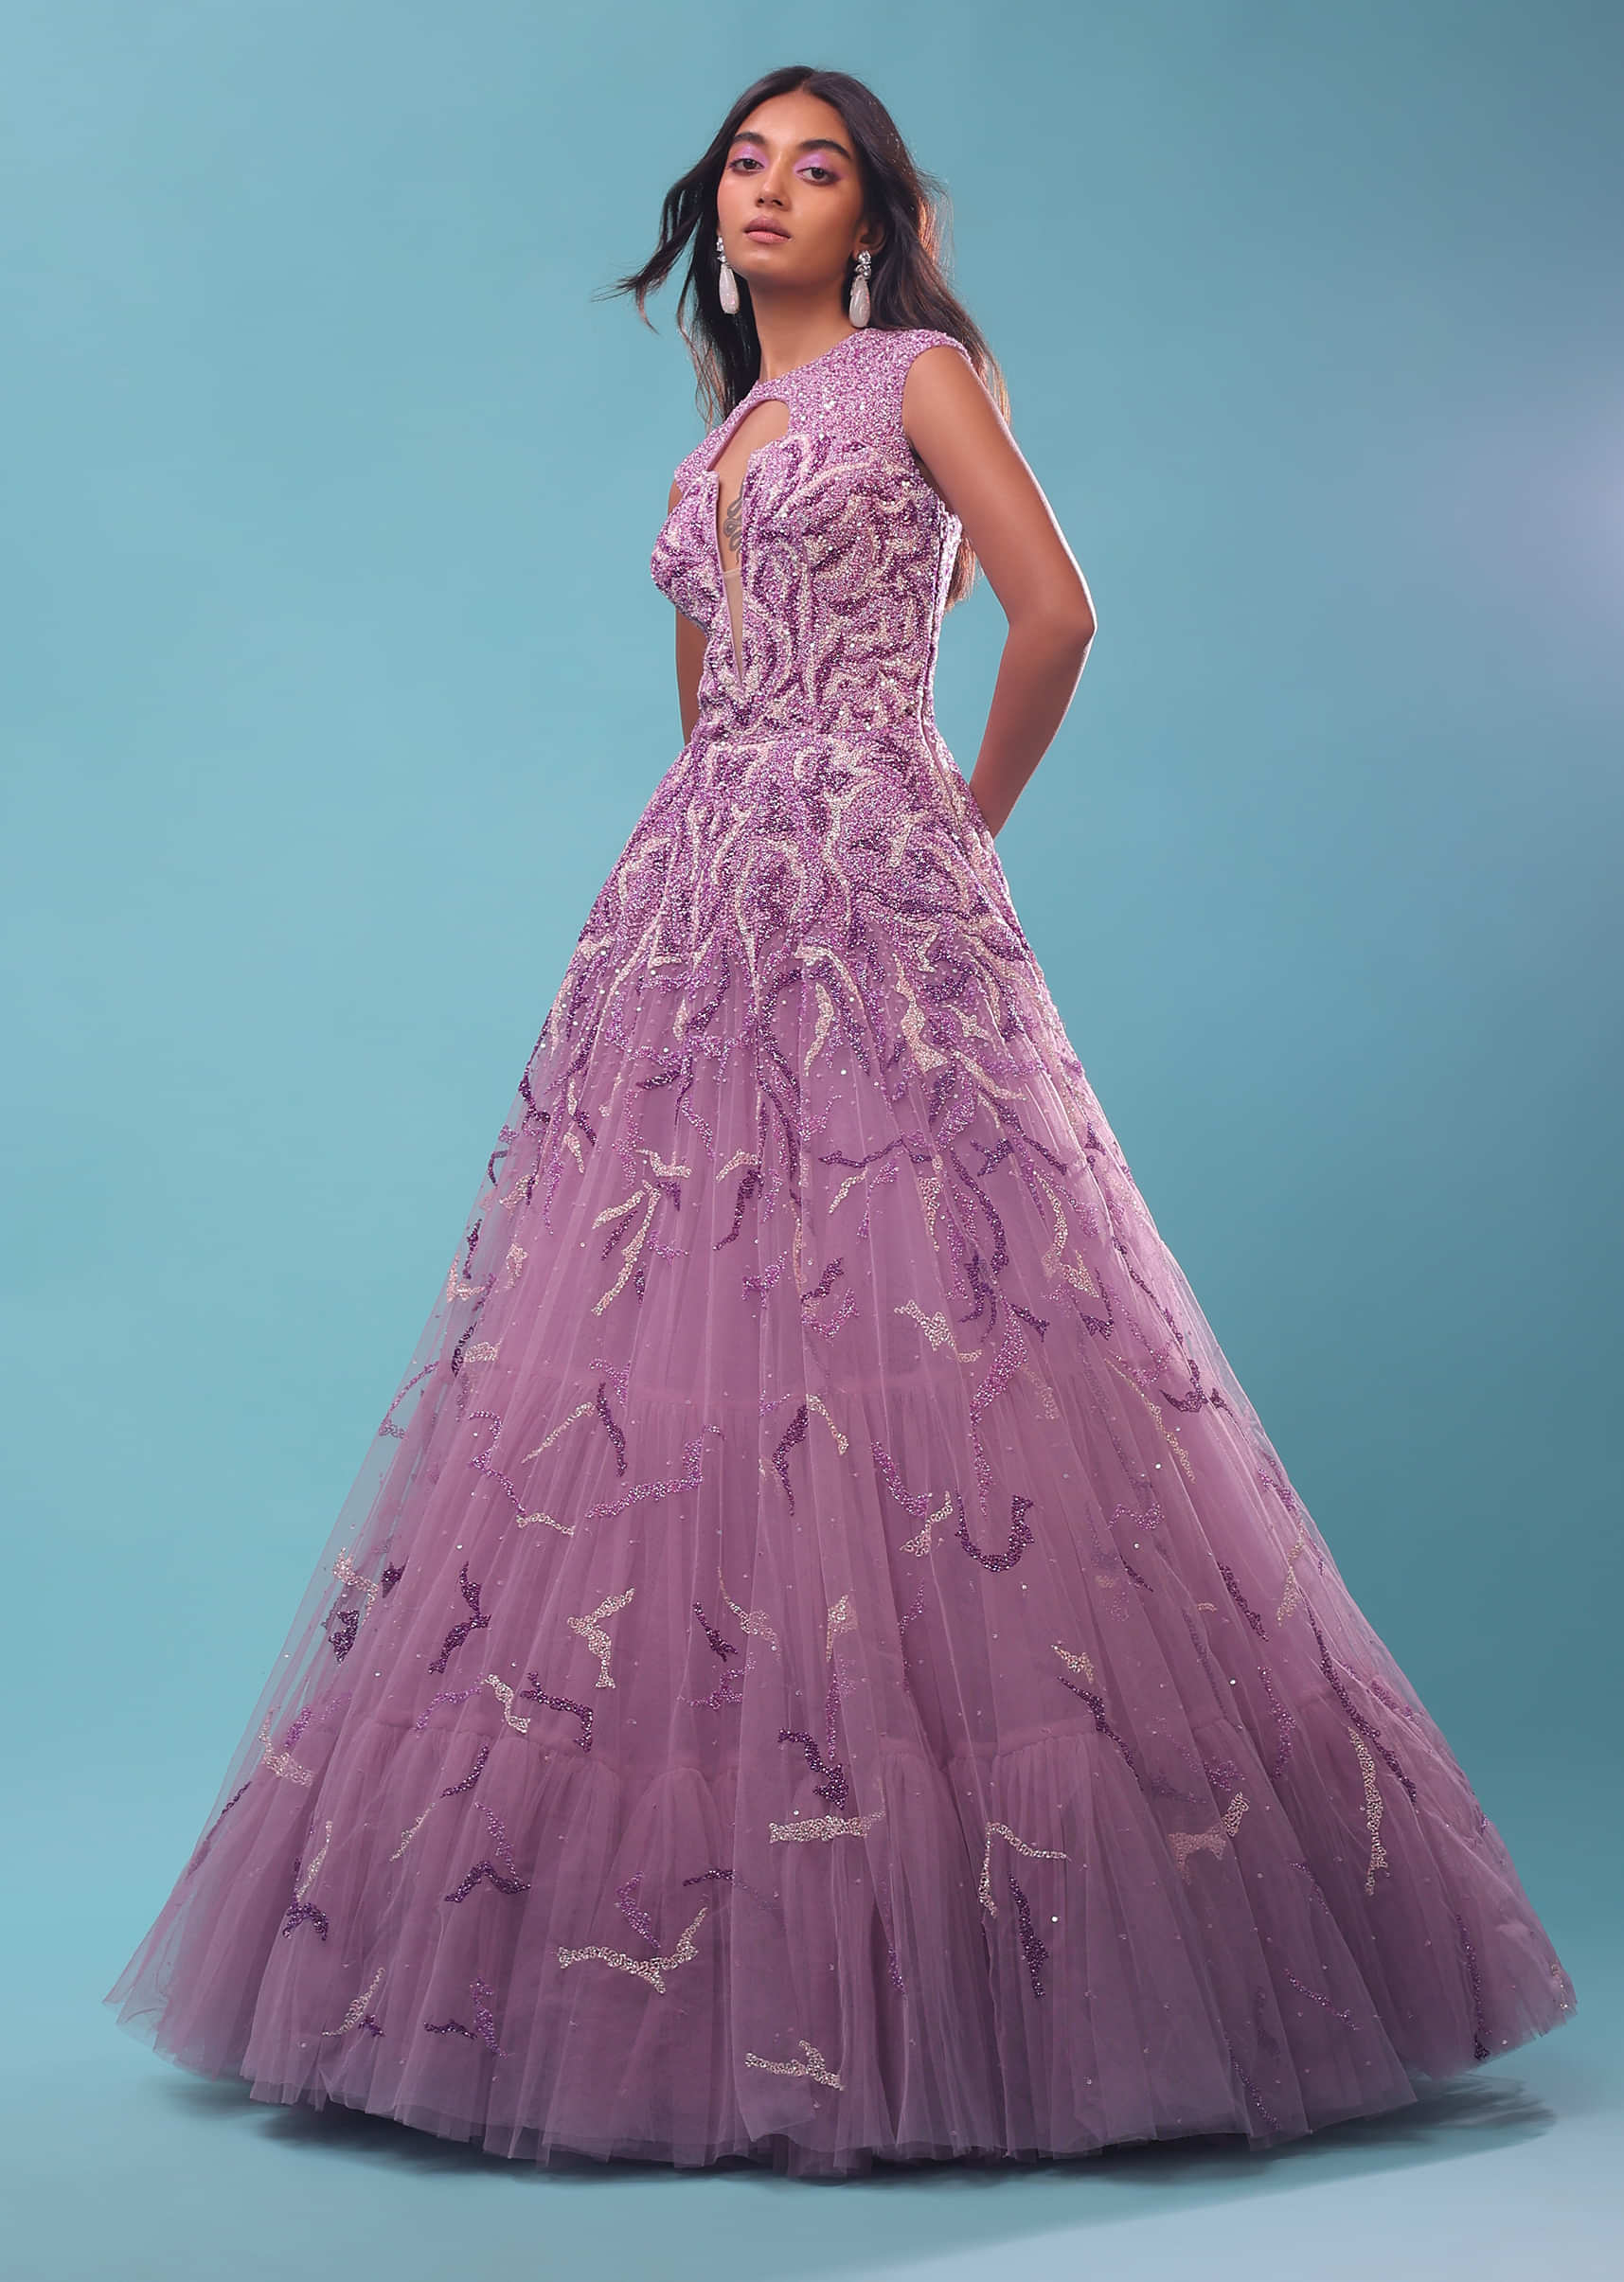 Reveal 141+ lavender color dress latest